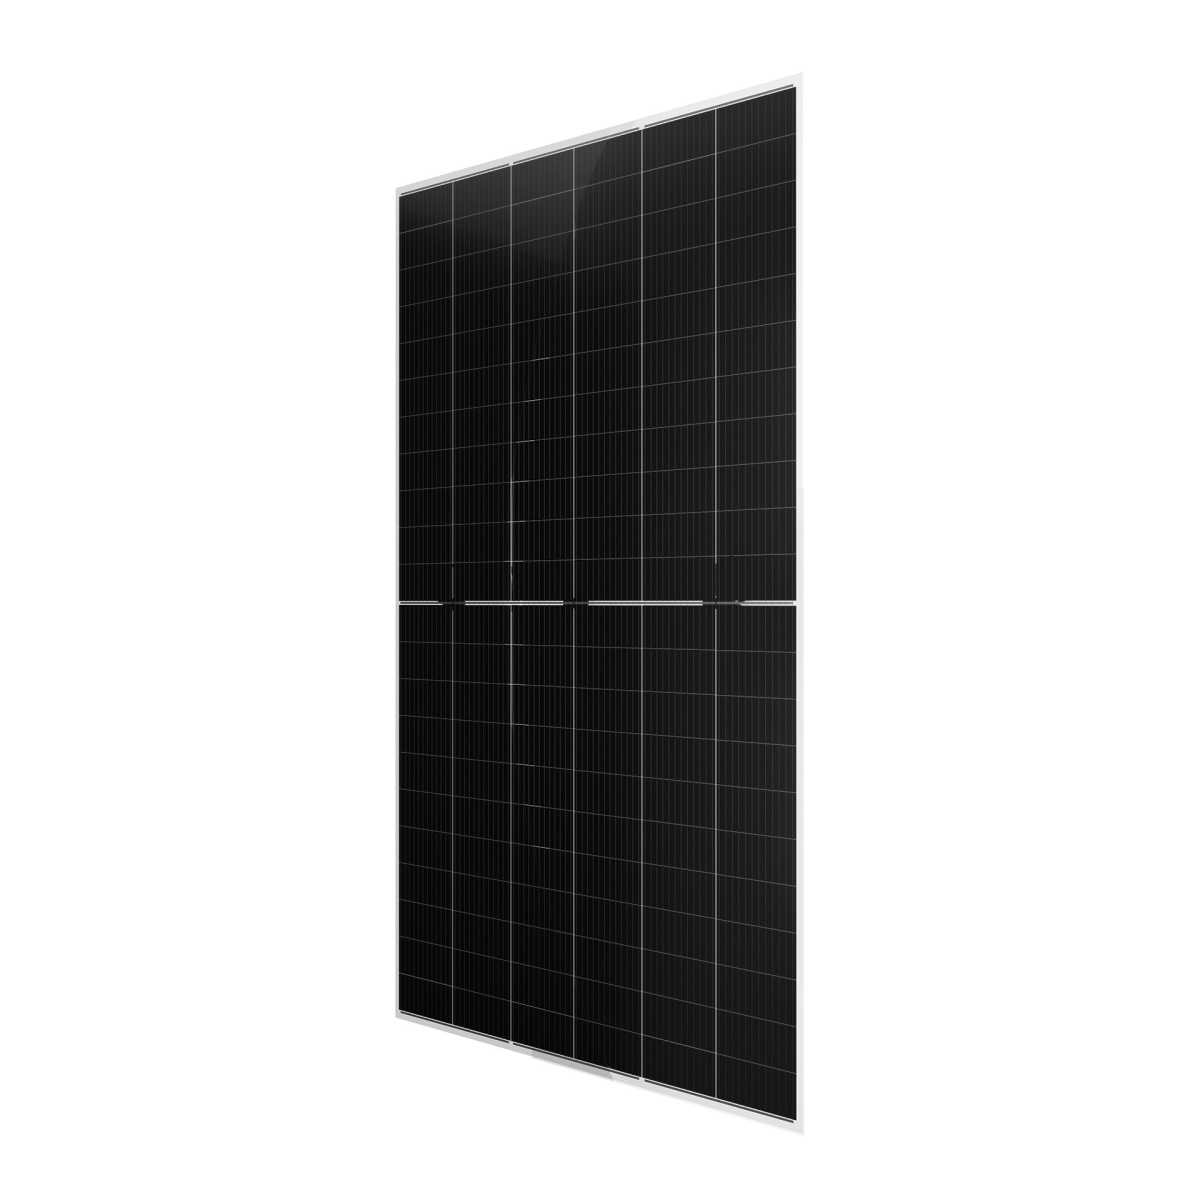 Tommatech 650Wp M12 132PM Zellen Bifacial G2G Half-Cut MB Solarmodul